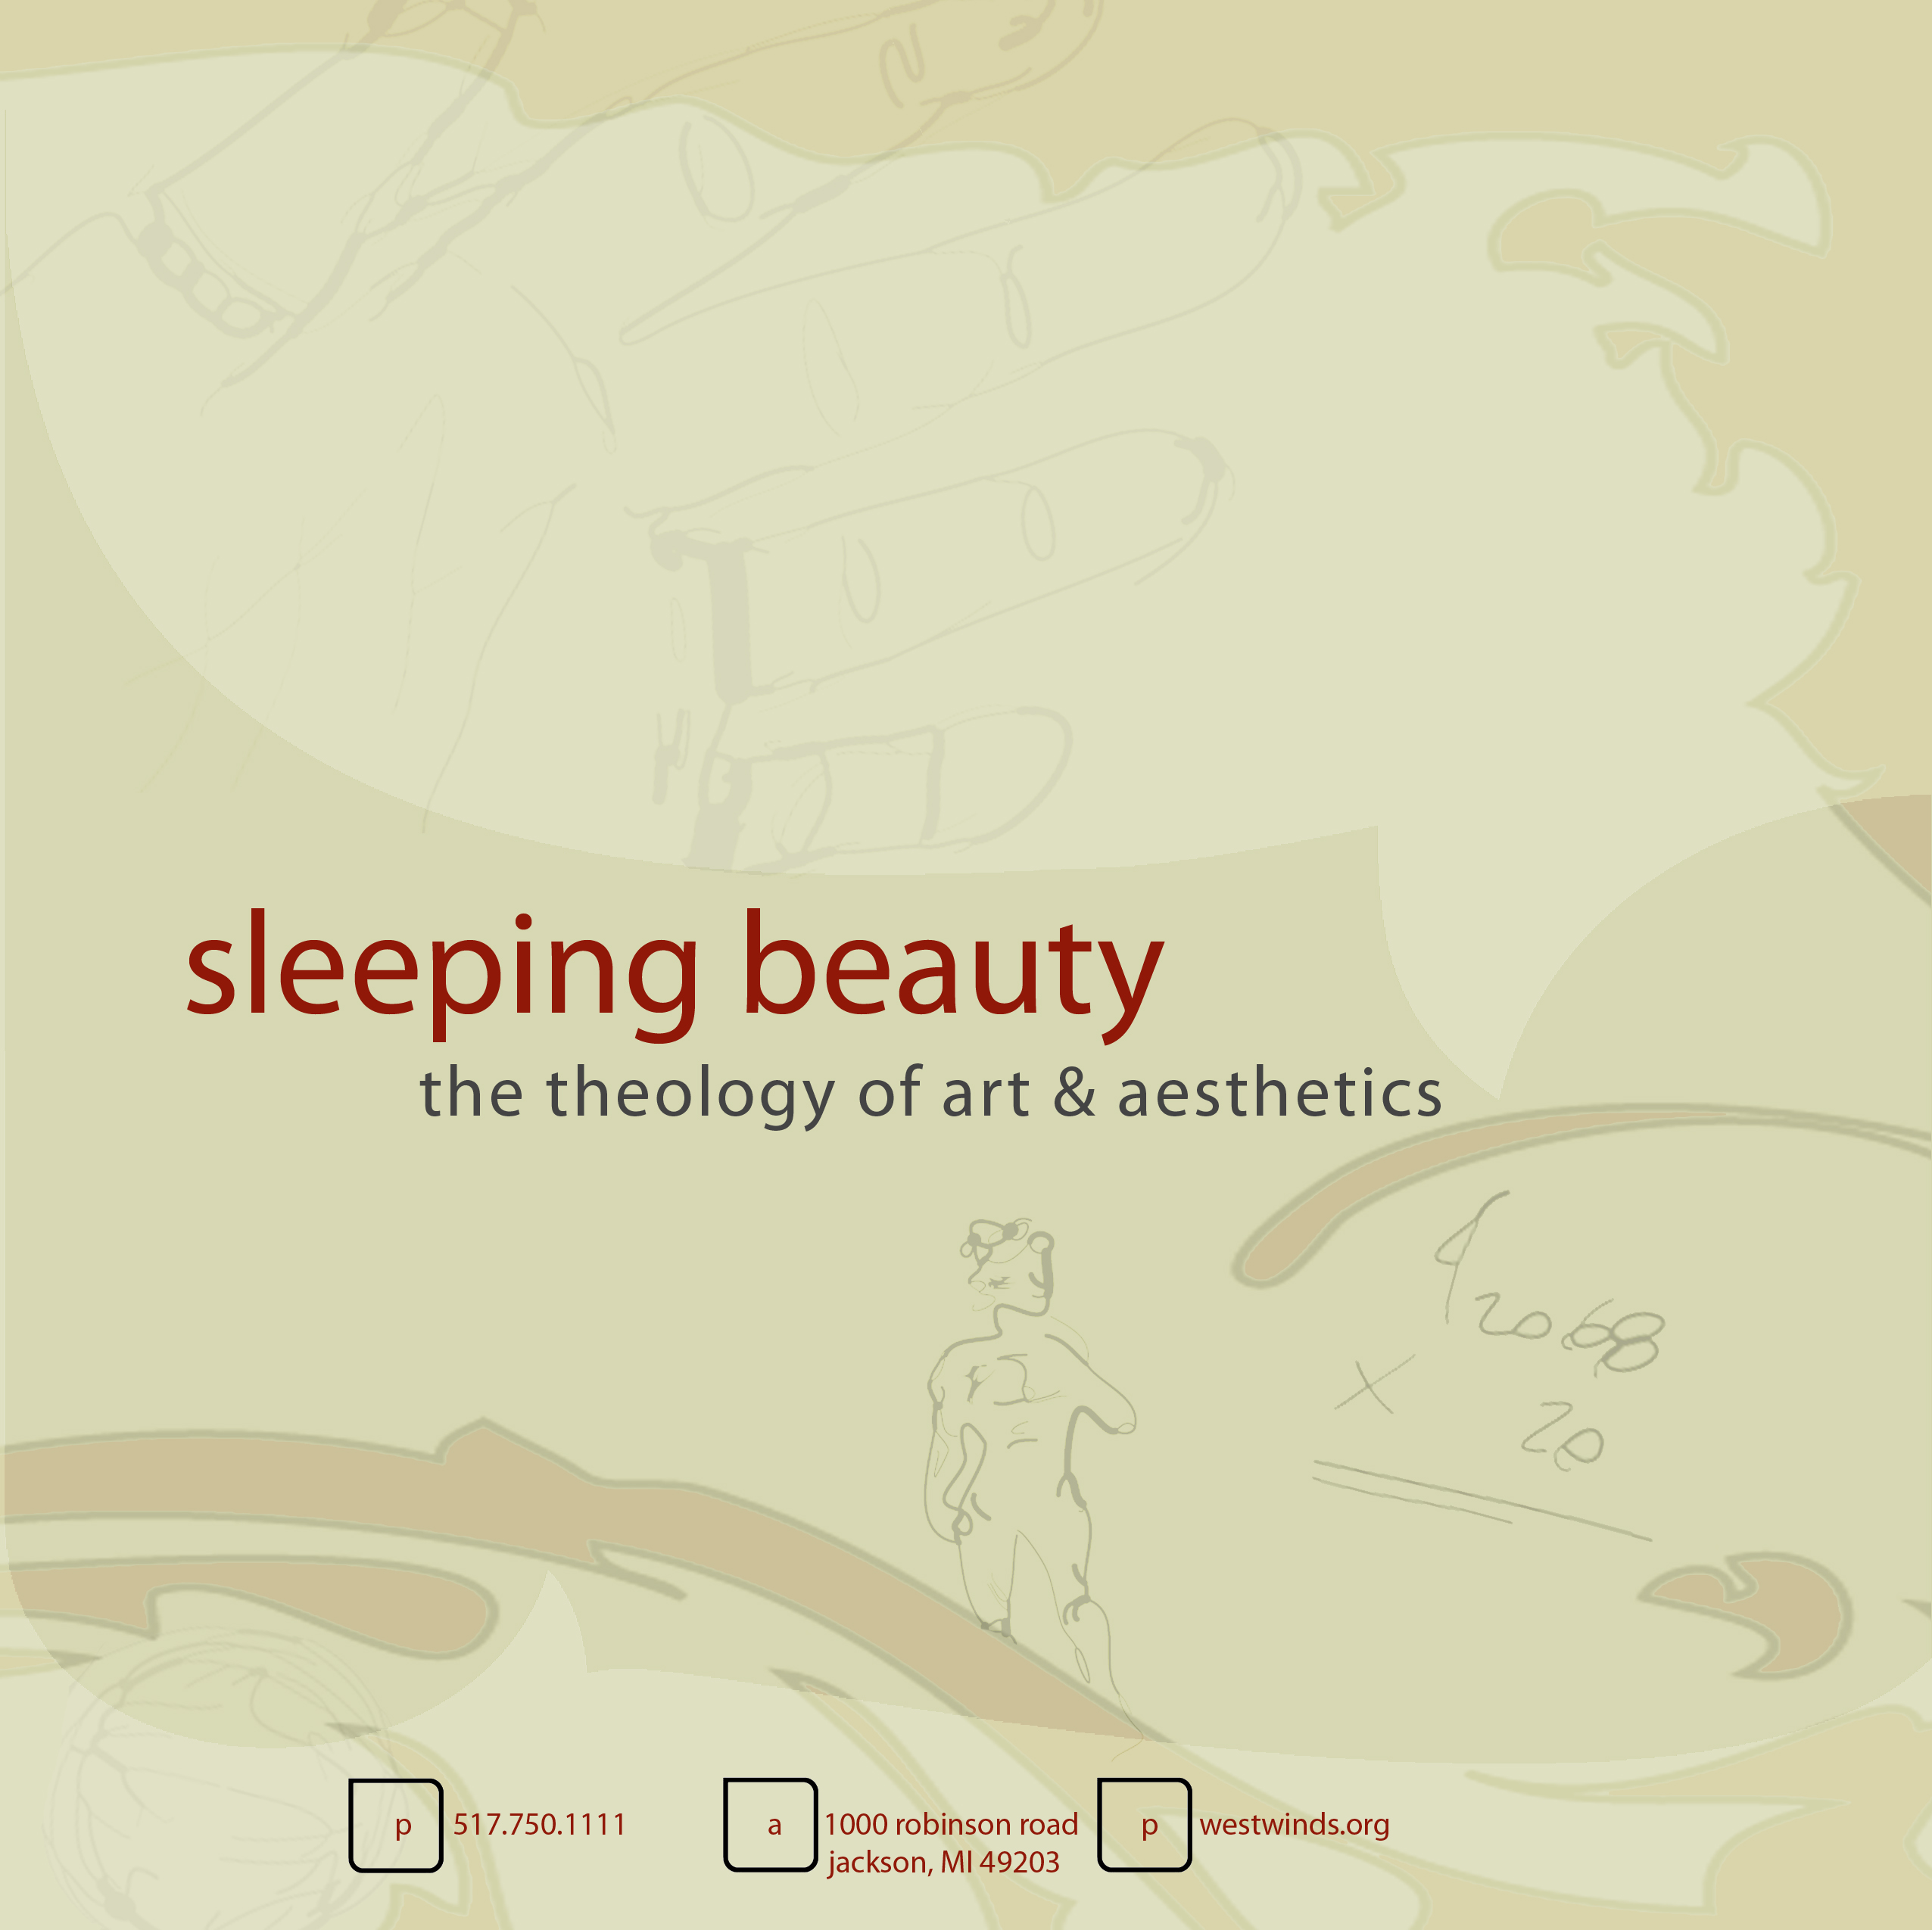 Sleeping Beauty: a theology of art and aesthetics